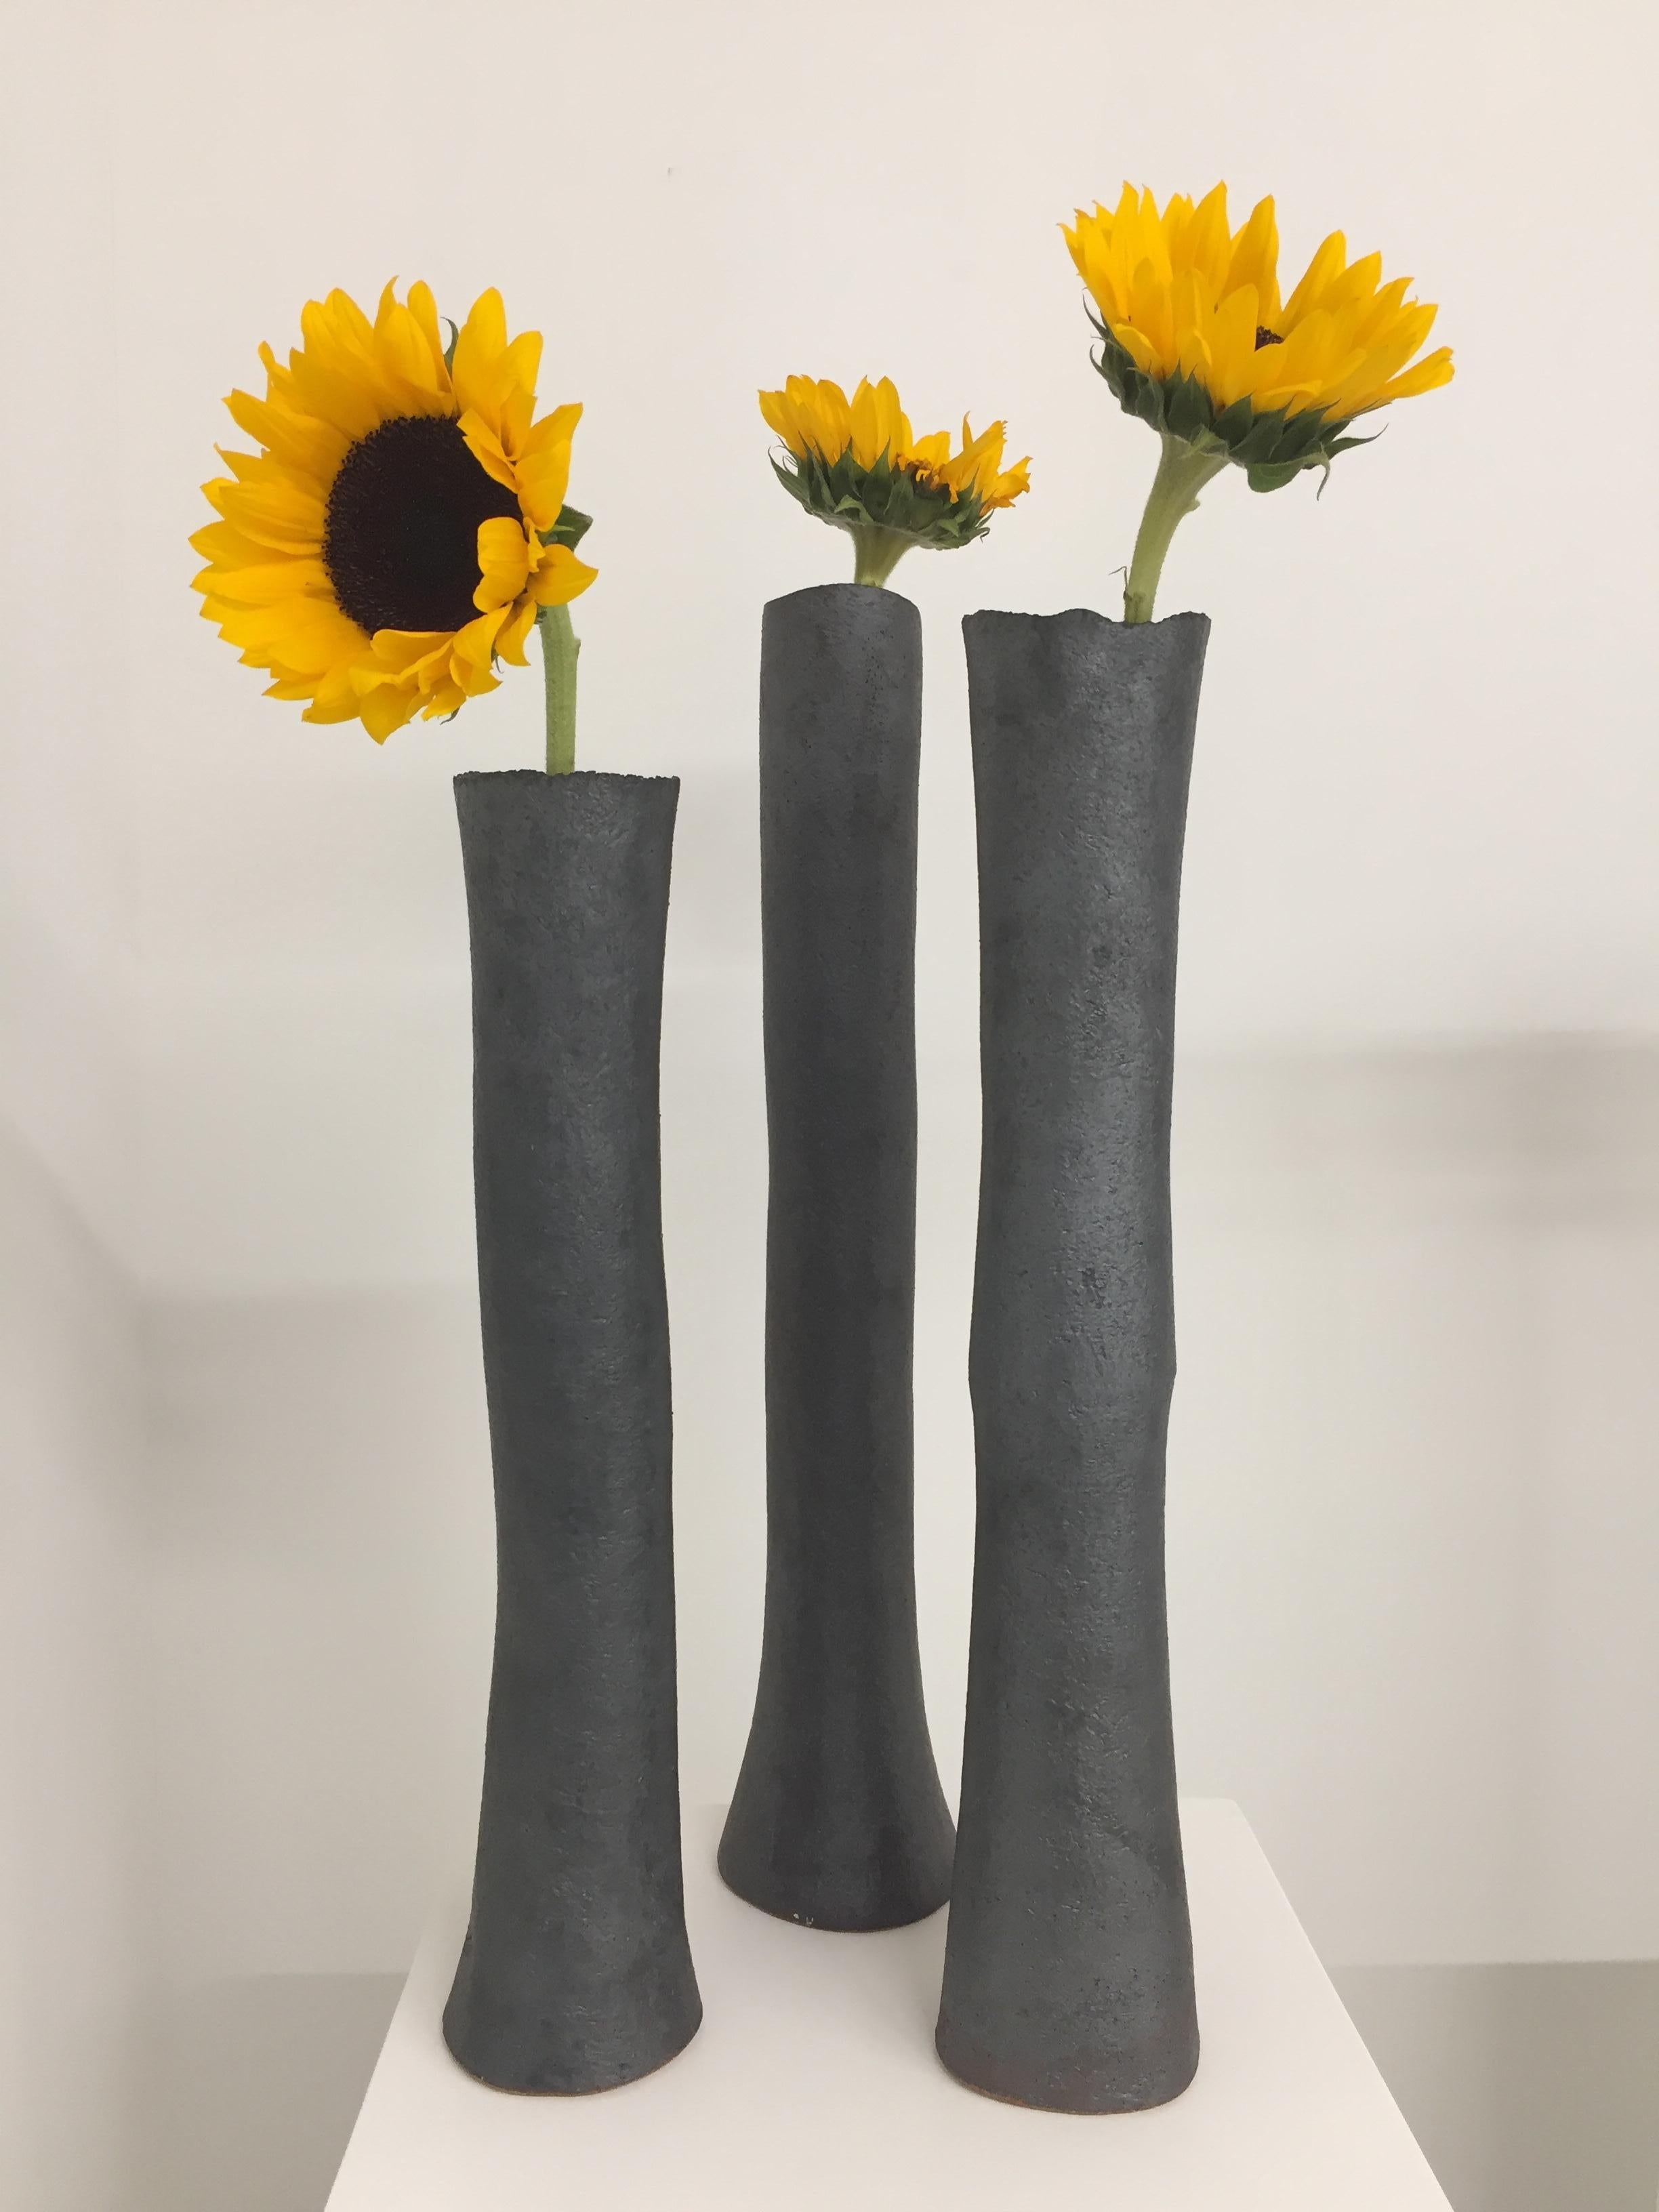 North American Tall, Tubular Metallic Black Stoneware Vase, 18 3/8 Inches High, Handbuilt